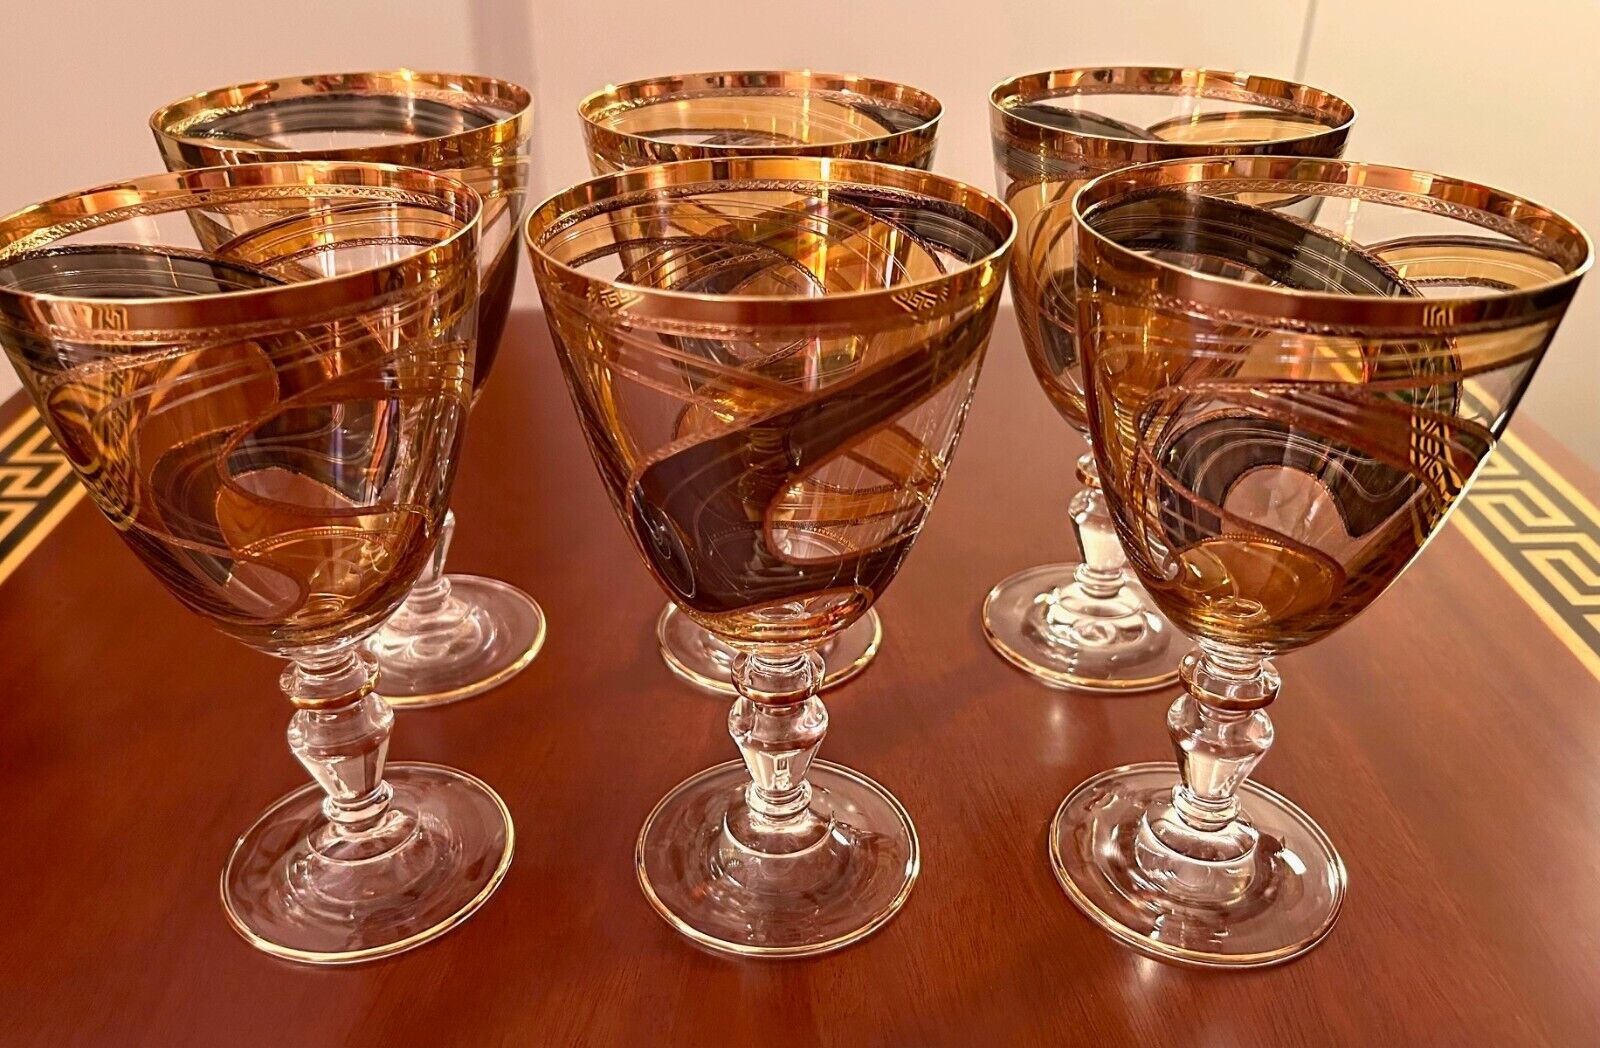 Italian Golden Hand-Painted Wine Glasses - Set of 6 (NEW)